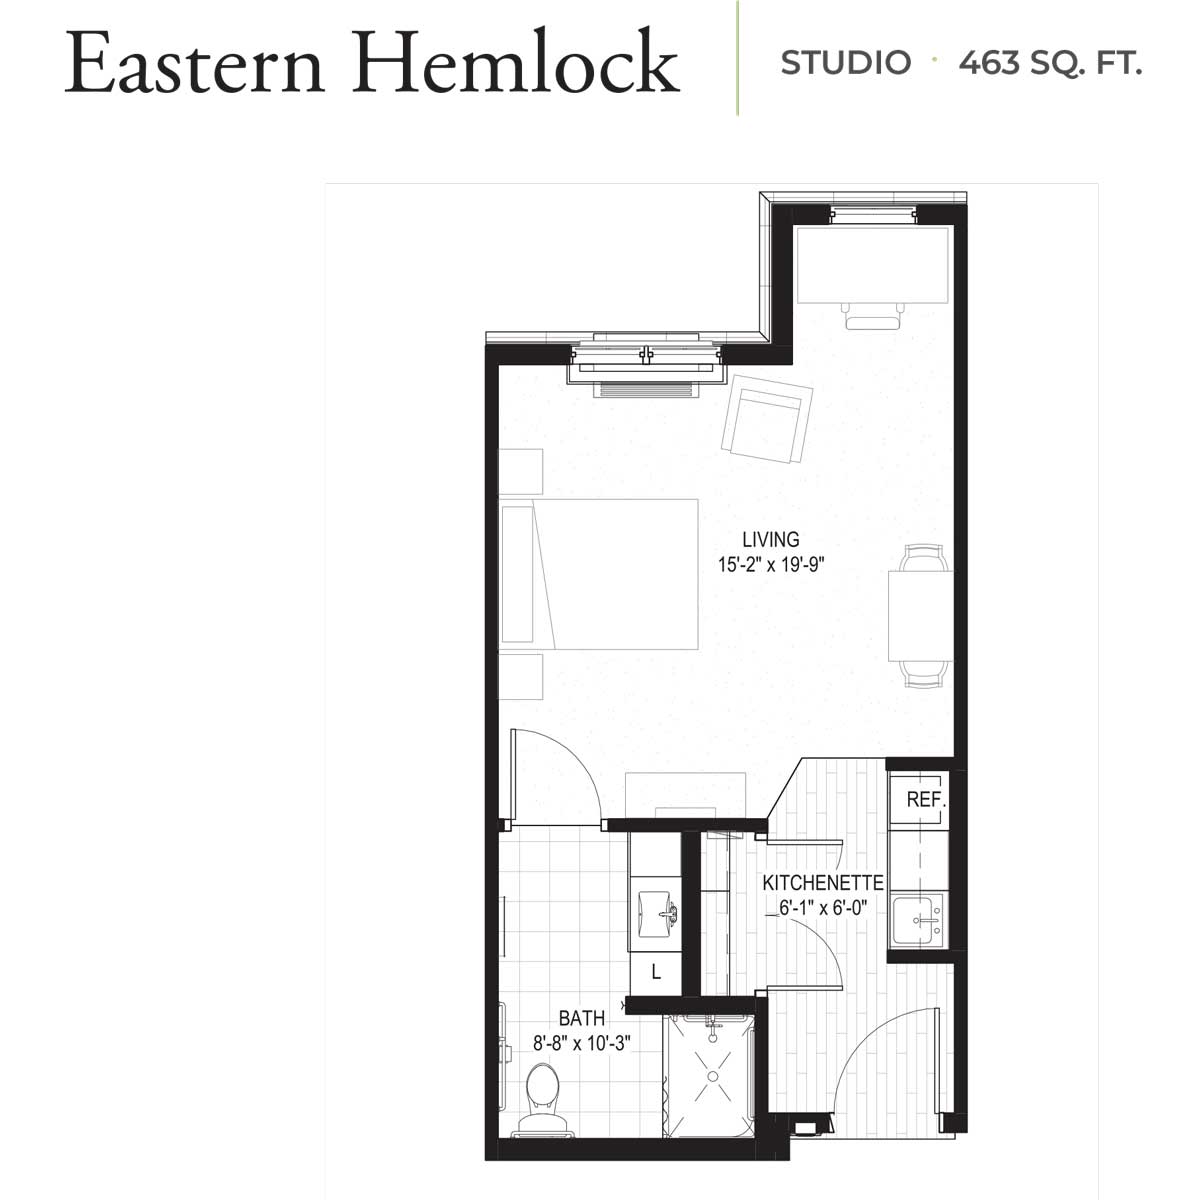 Floor plan of Eastern Hemlock studio apartment measuring 463 square feet, including living area, kitchenette, and bathroom.